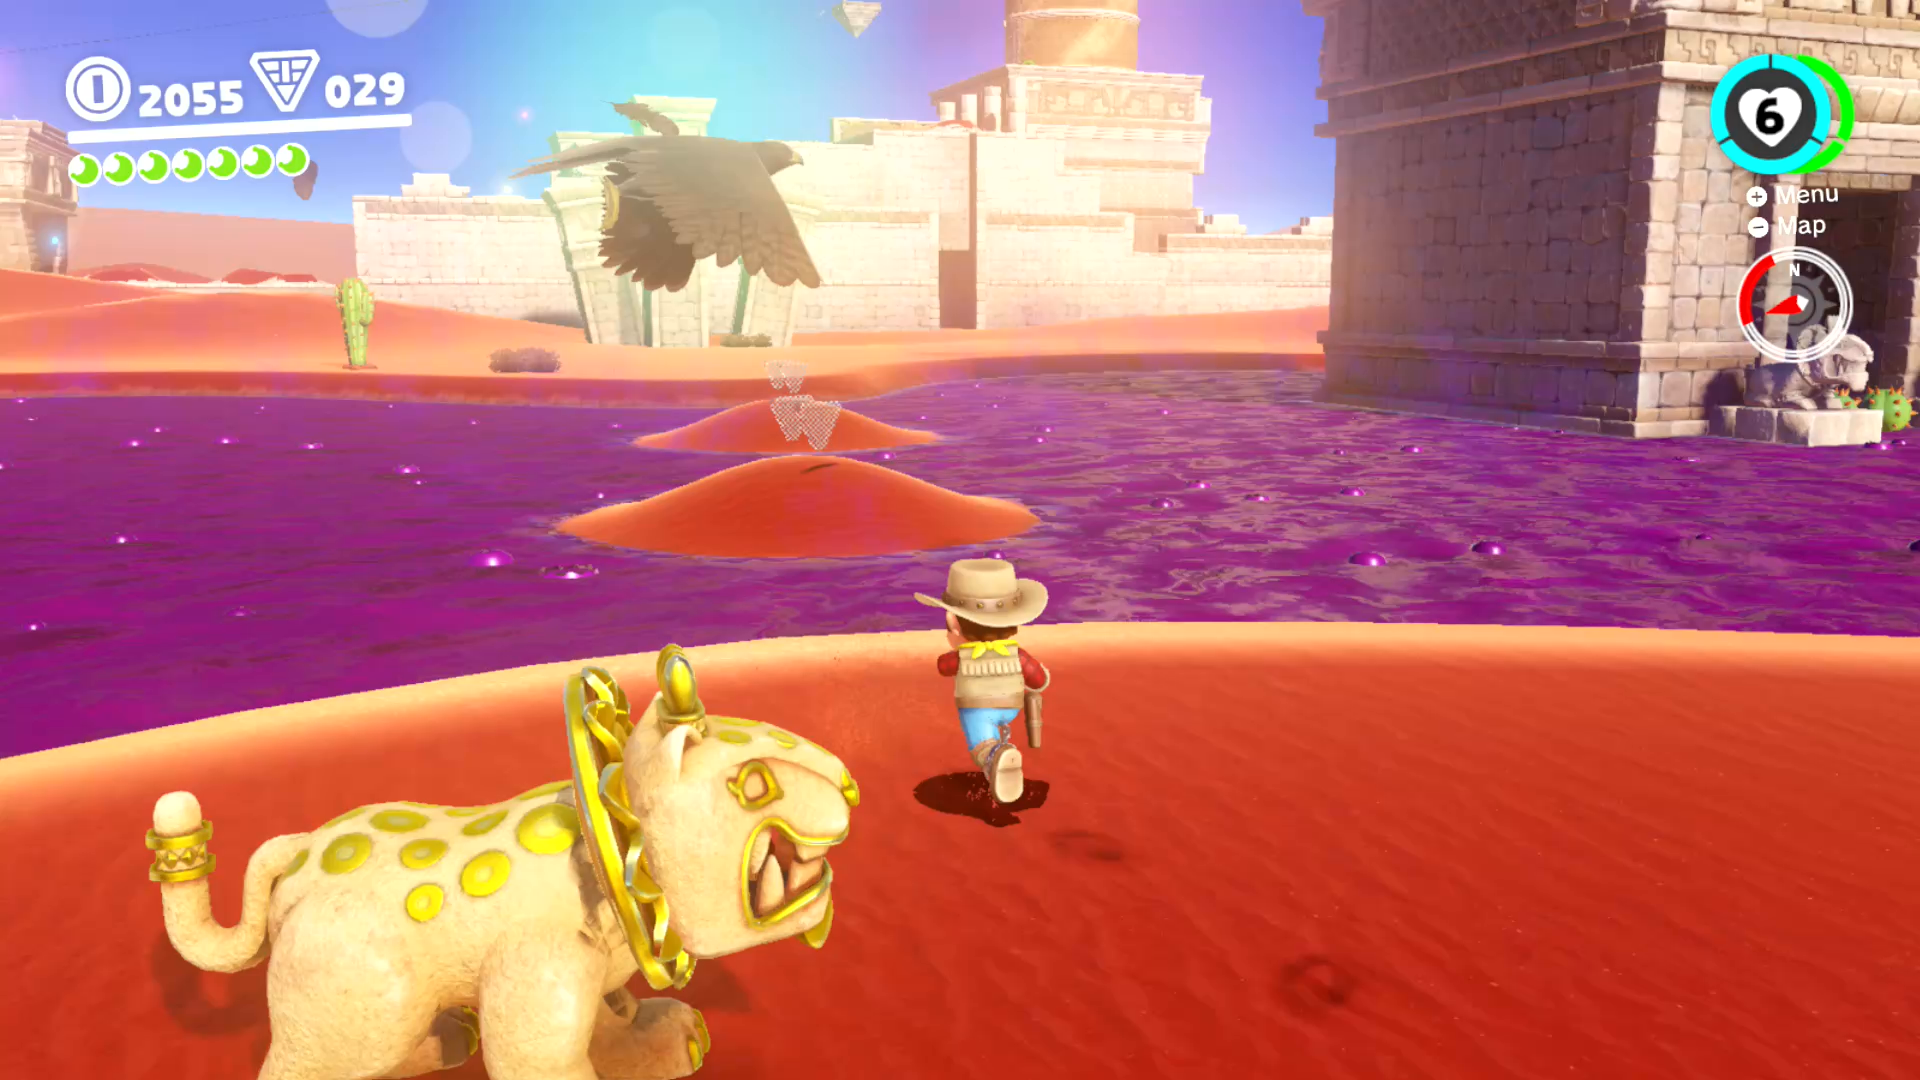 Sand Kingdom: Power Moons 21-40 - Super Mario Odyssey Walkthrough - Mario  Party Legacy